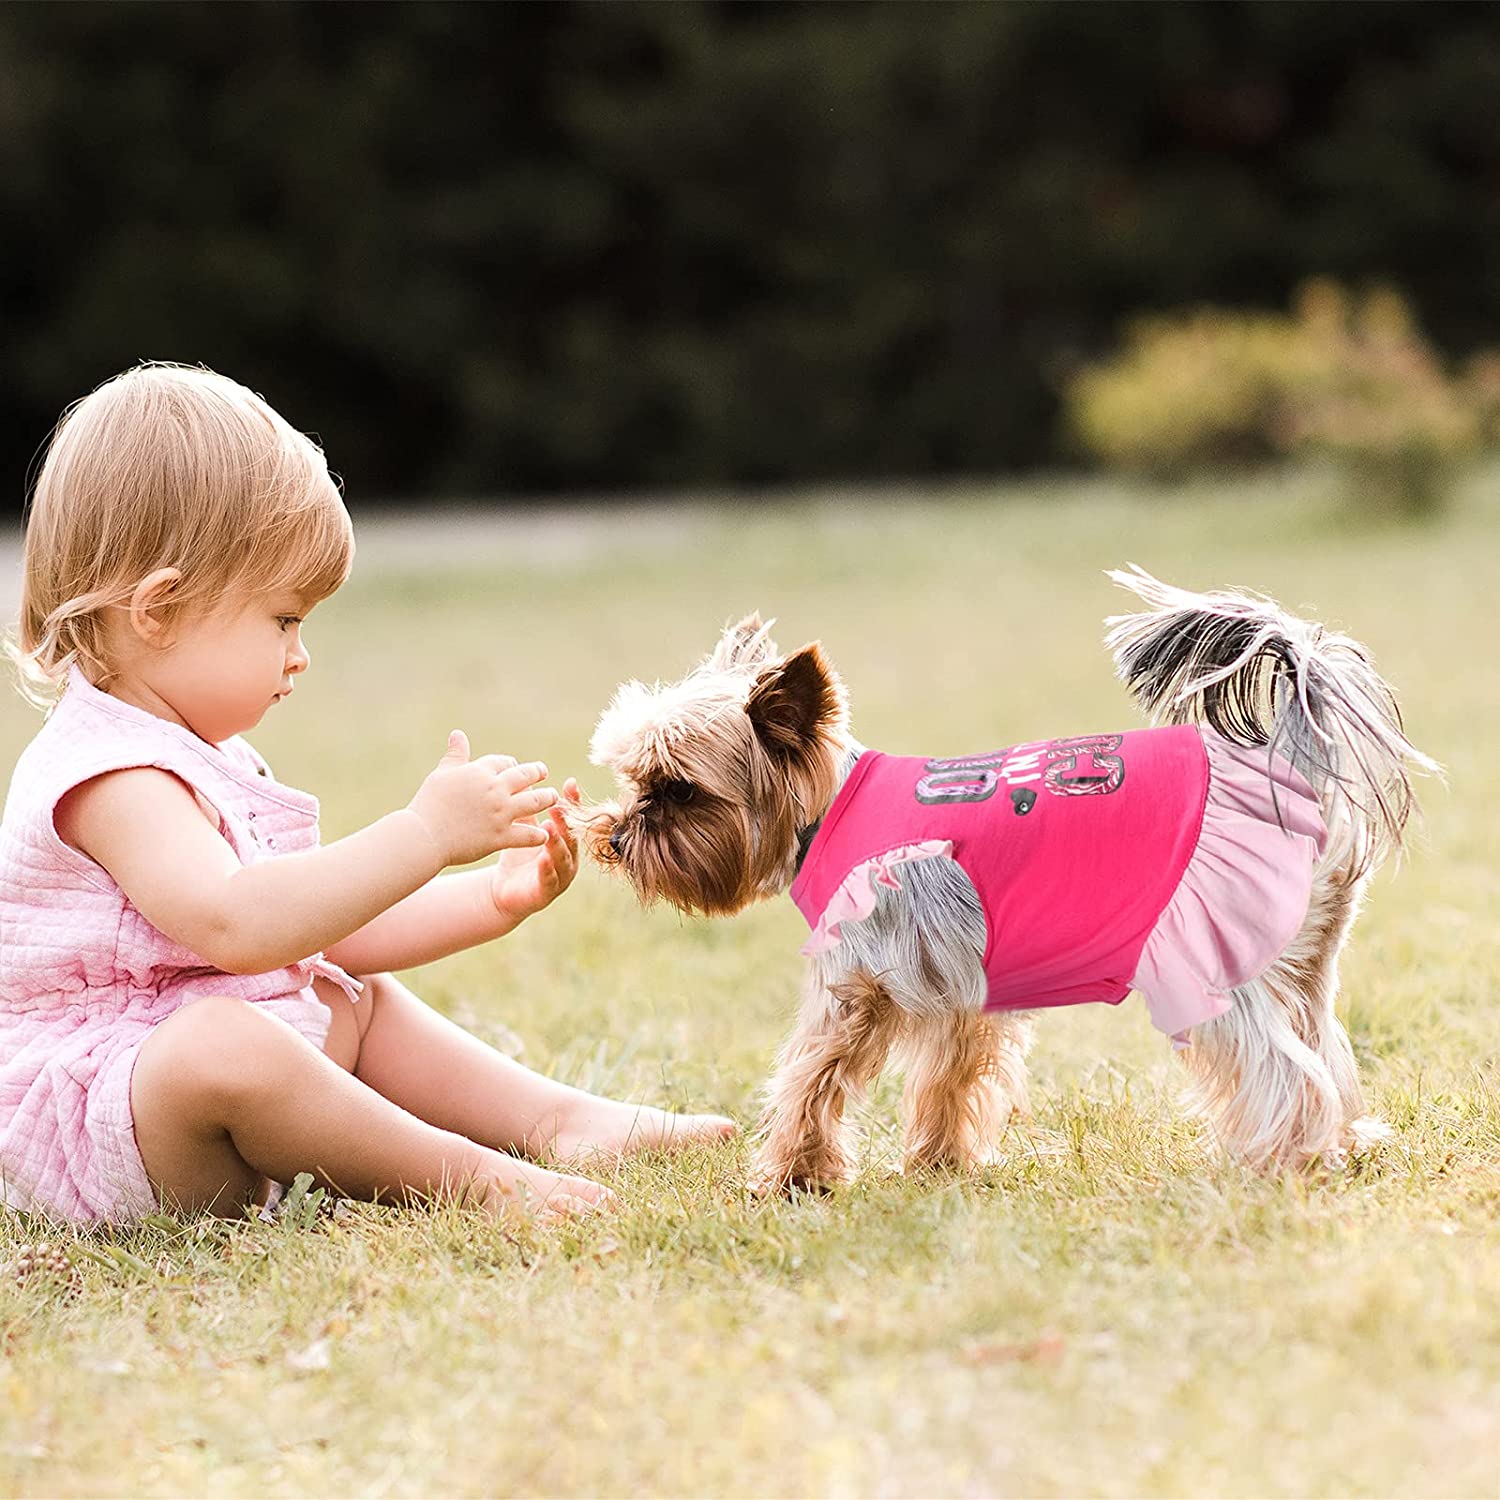 KUTKUT Small Dog Dress Pet Tutu Dress Puppy Dress Cute Dog Princess Skirt Elegant Pet Summer Apparel Doggie Clothes for Small Dogs Cats Pets (OMG Pink) - kutkutstyle